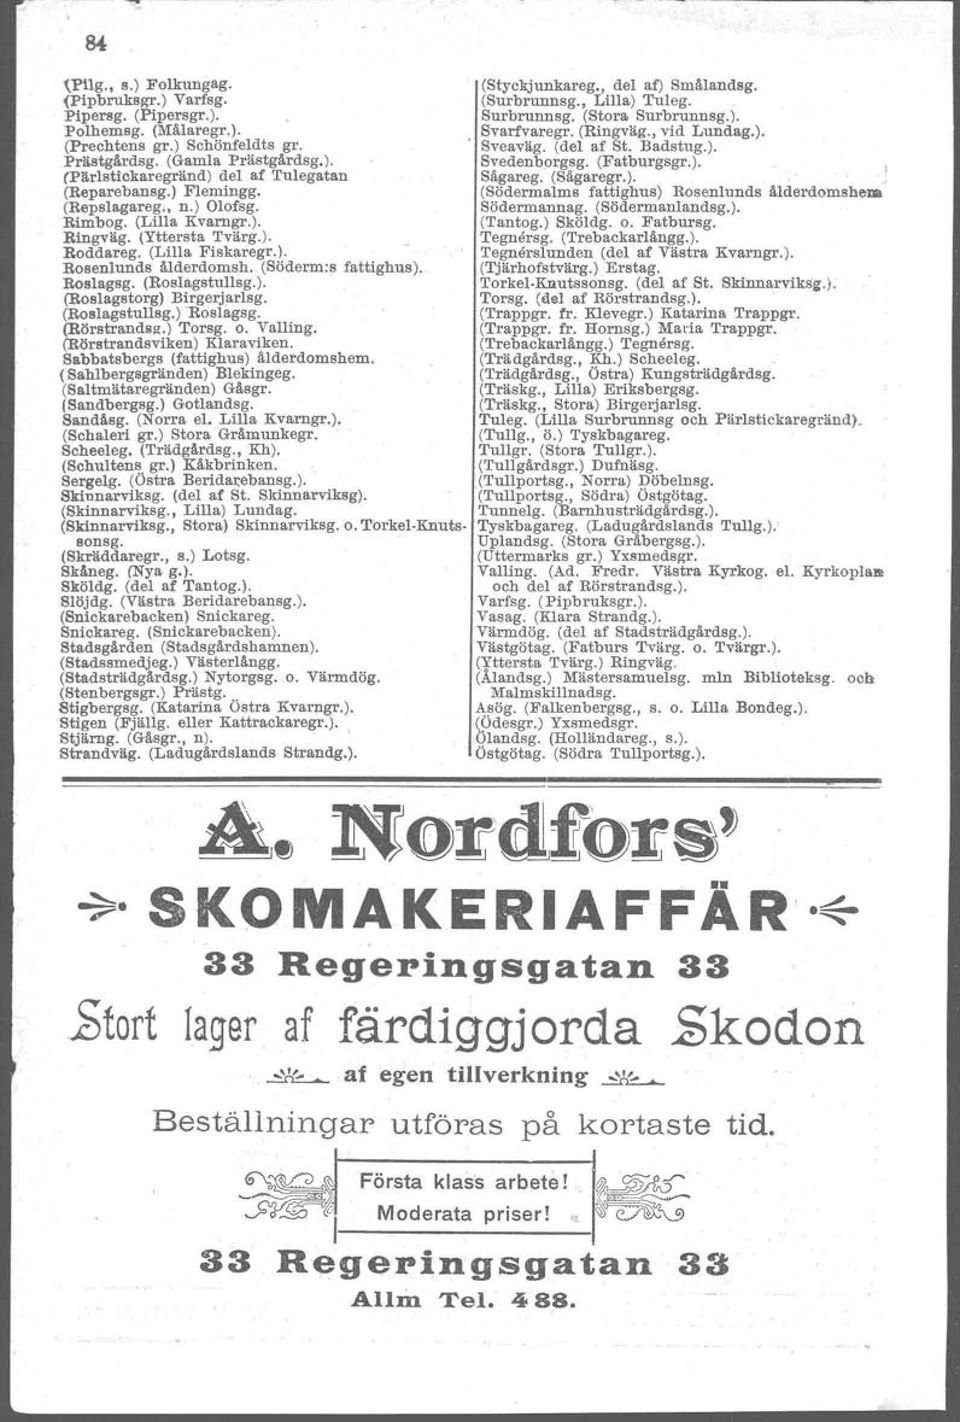 (Bågaregr.). (Reparebansg.) Flemingg. (Södermalms fattighus) Rosenlunds ålderdomshem (Repslagareg., n.) Olofsg. Södermannag. (Södermanlandsg.). Rimbog. (Lilla Kvarngr.). (Tantog.) Sköldg. o. Fatbursg.